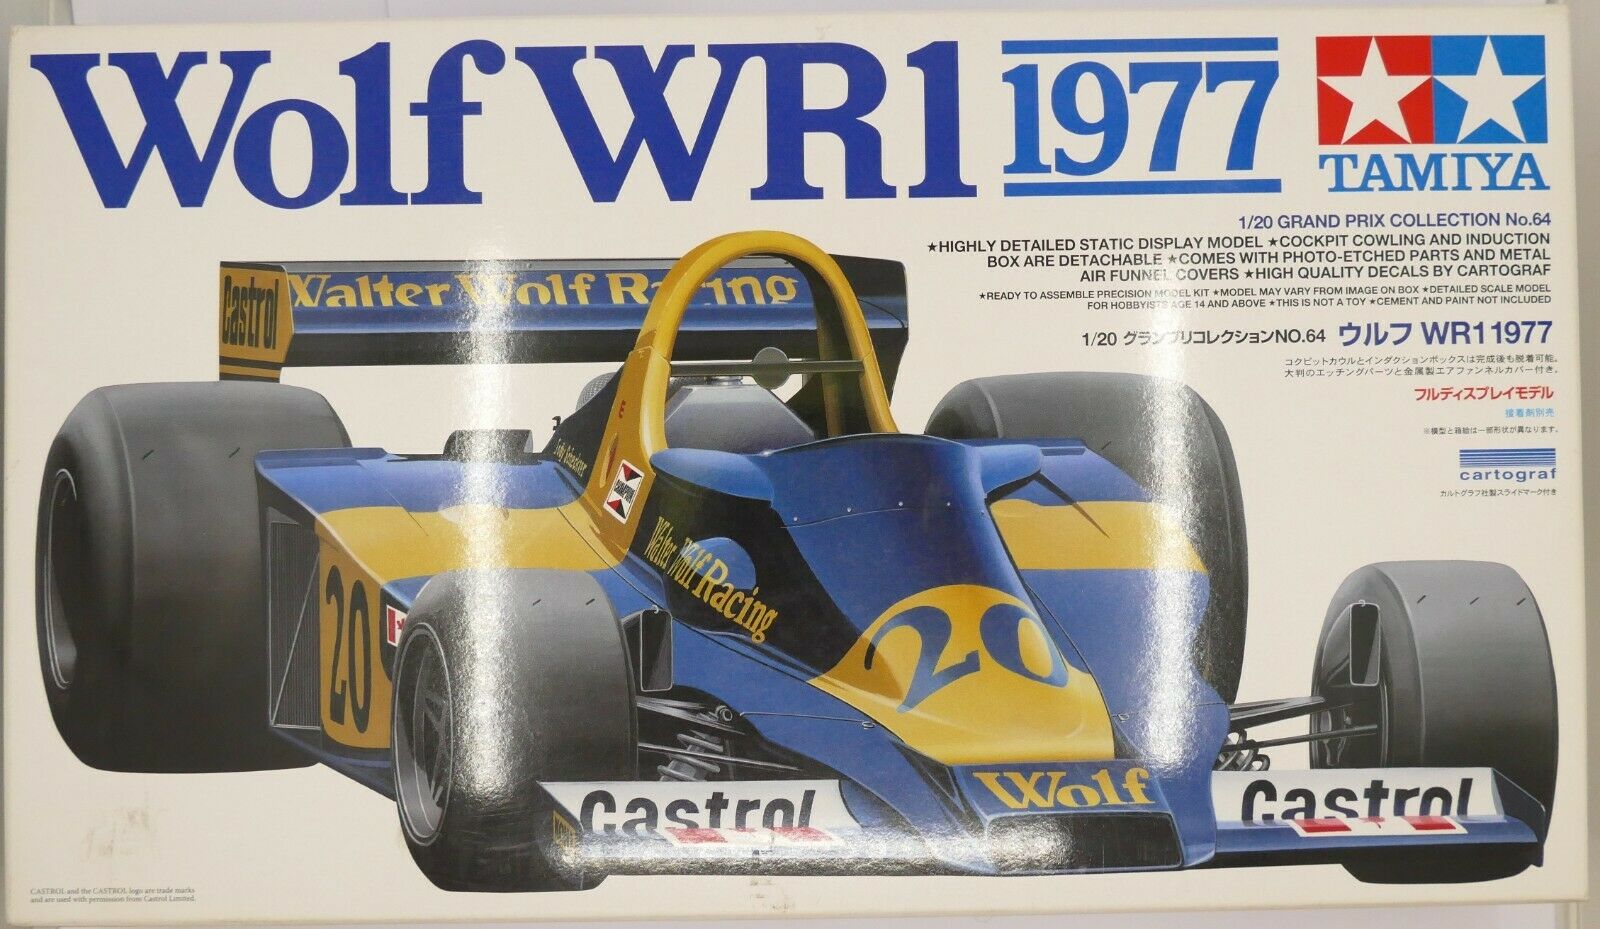 TAMIYA 20064 Wolf WR1 1977 1/20 Grand Prix Collection Series No.64